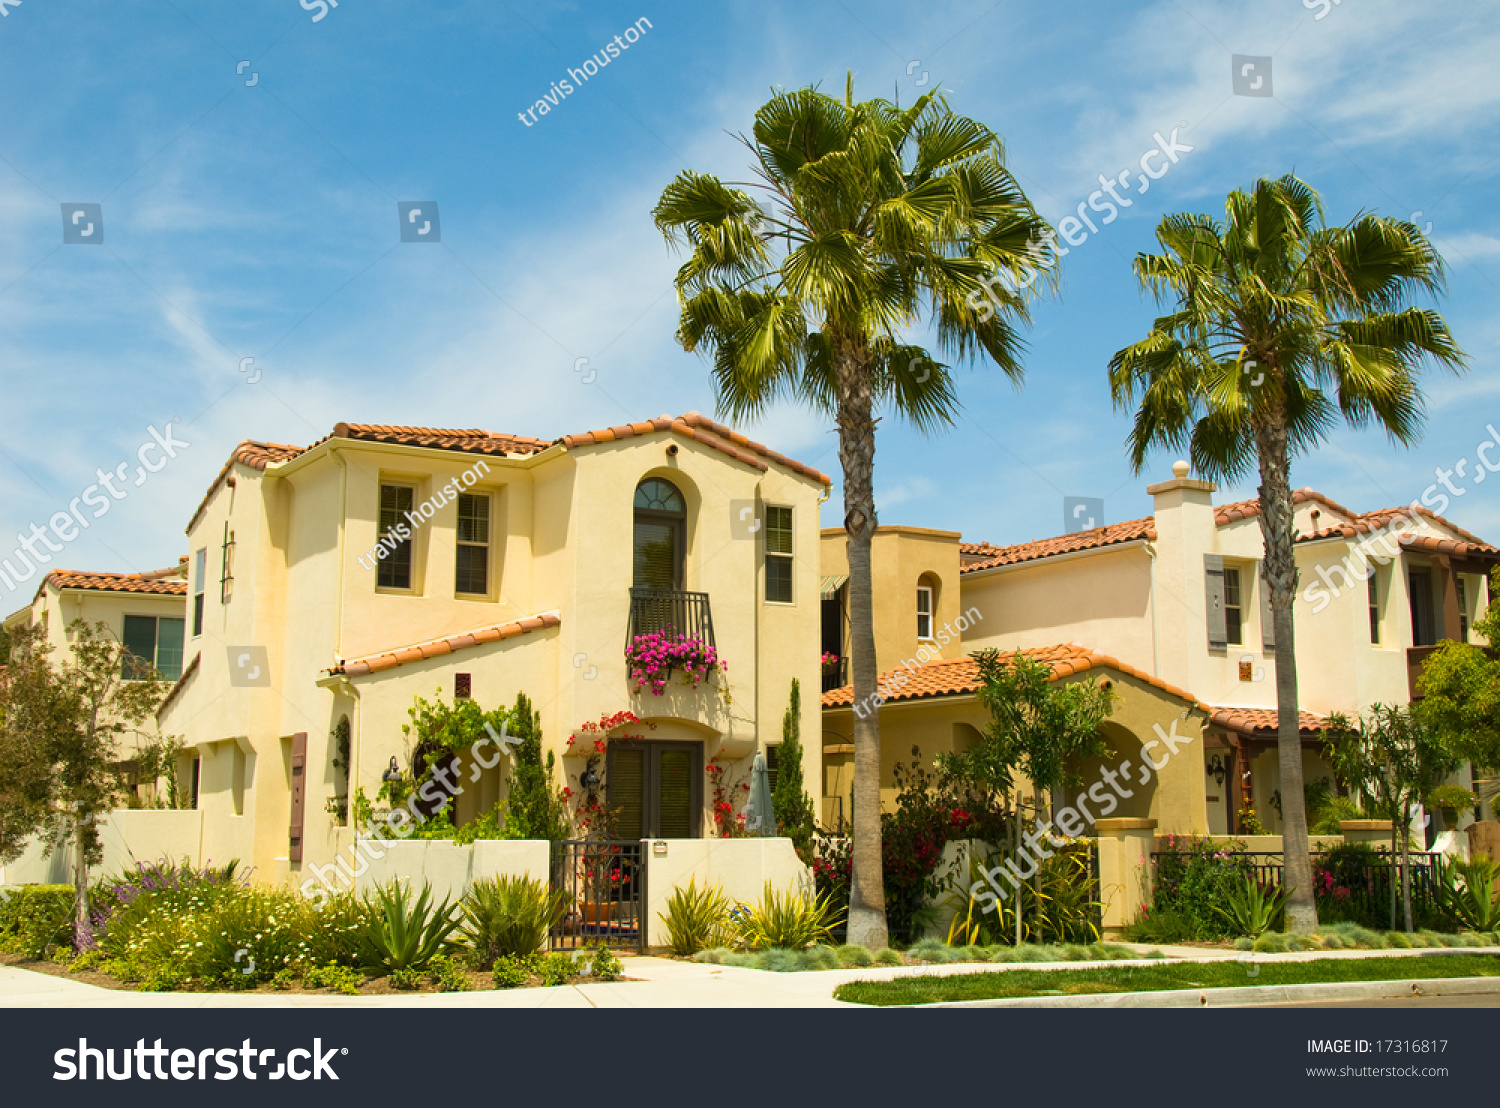 spanish style houses